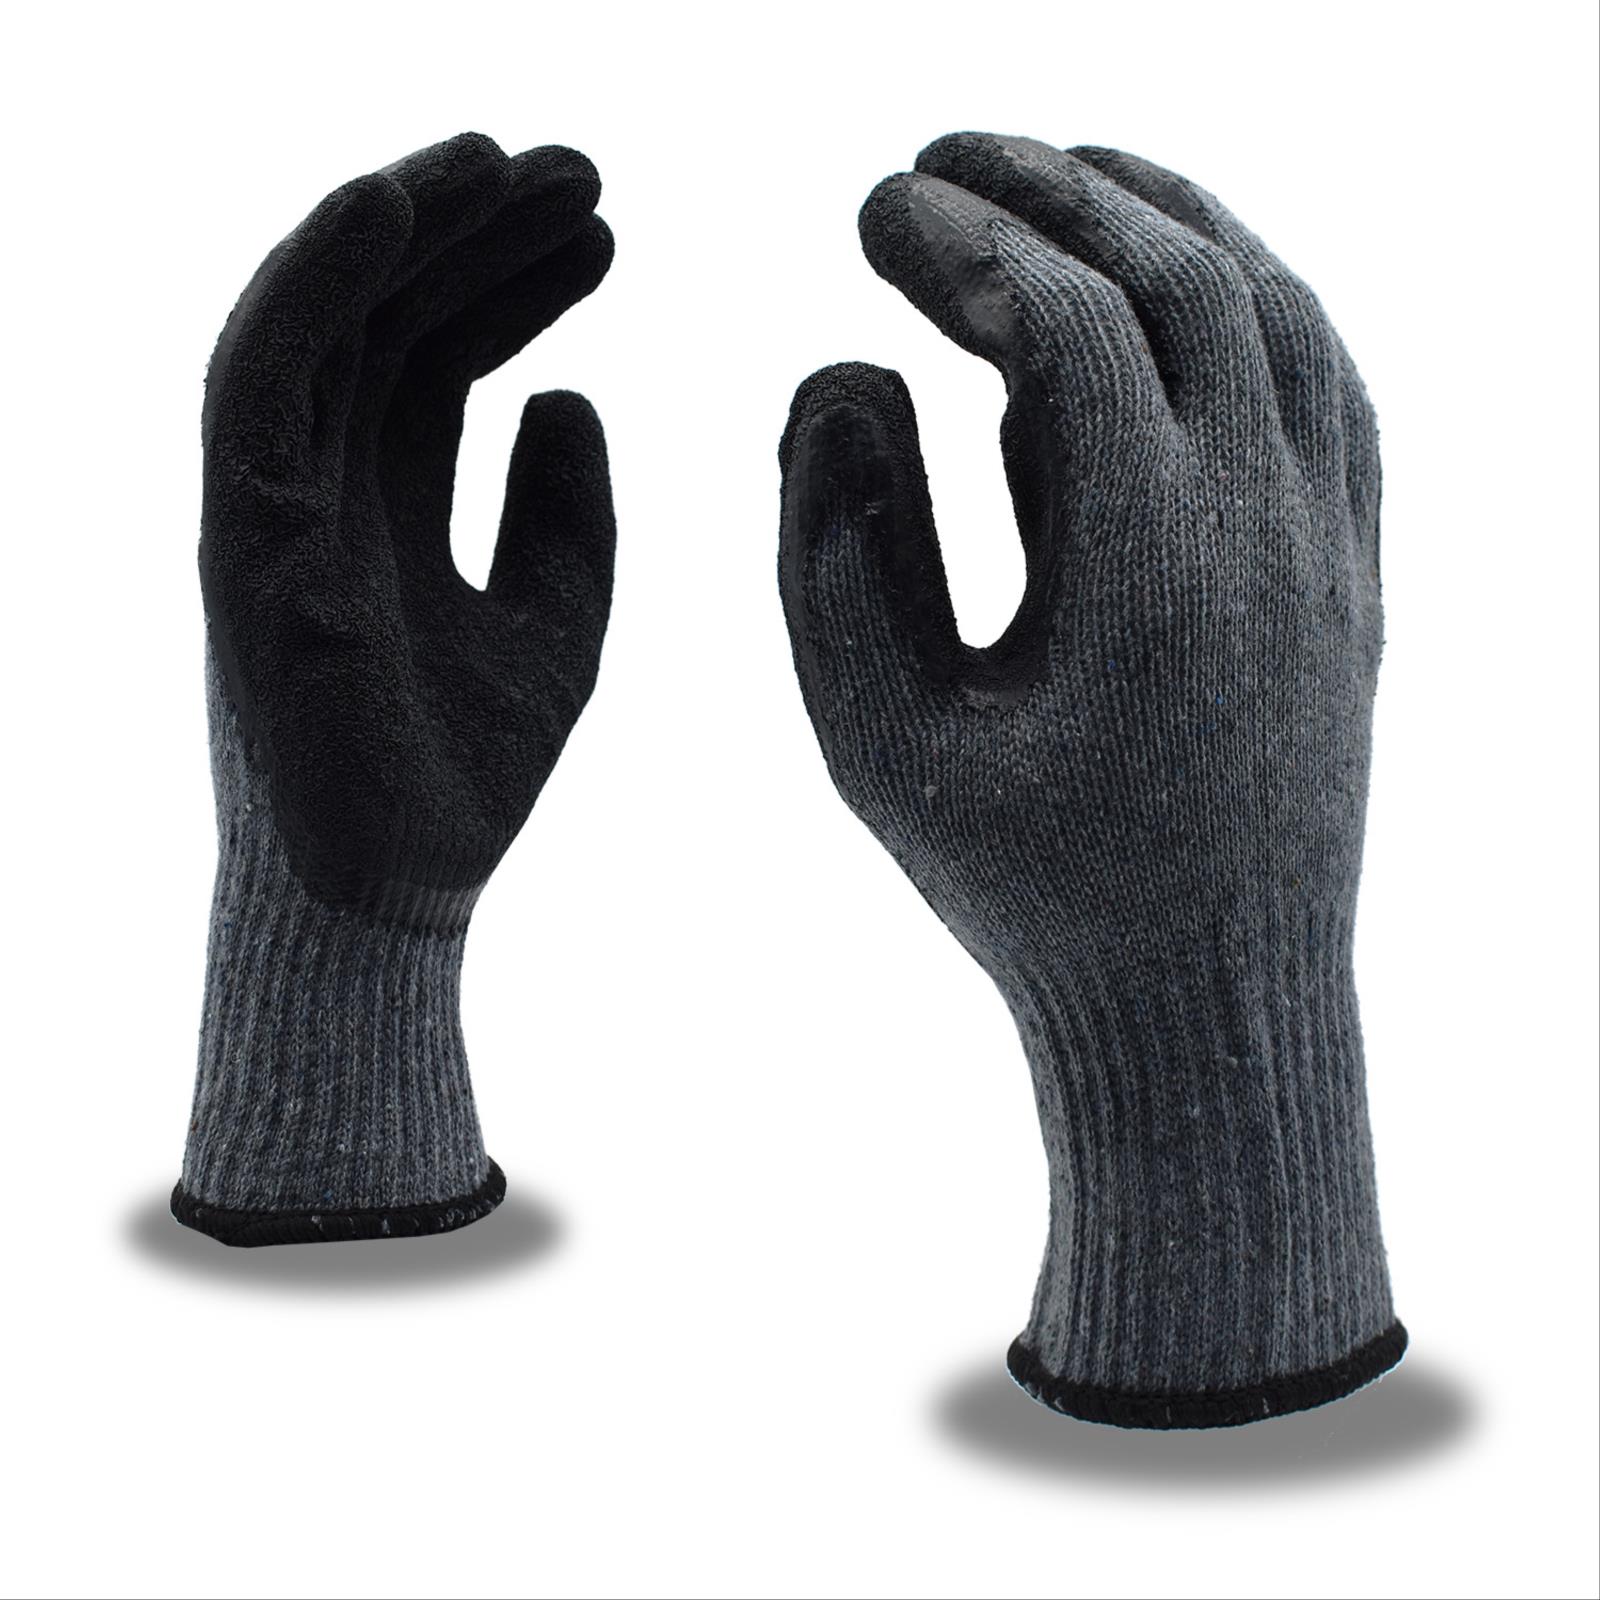 Economy Latex Palm Coated Glove